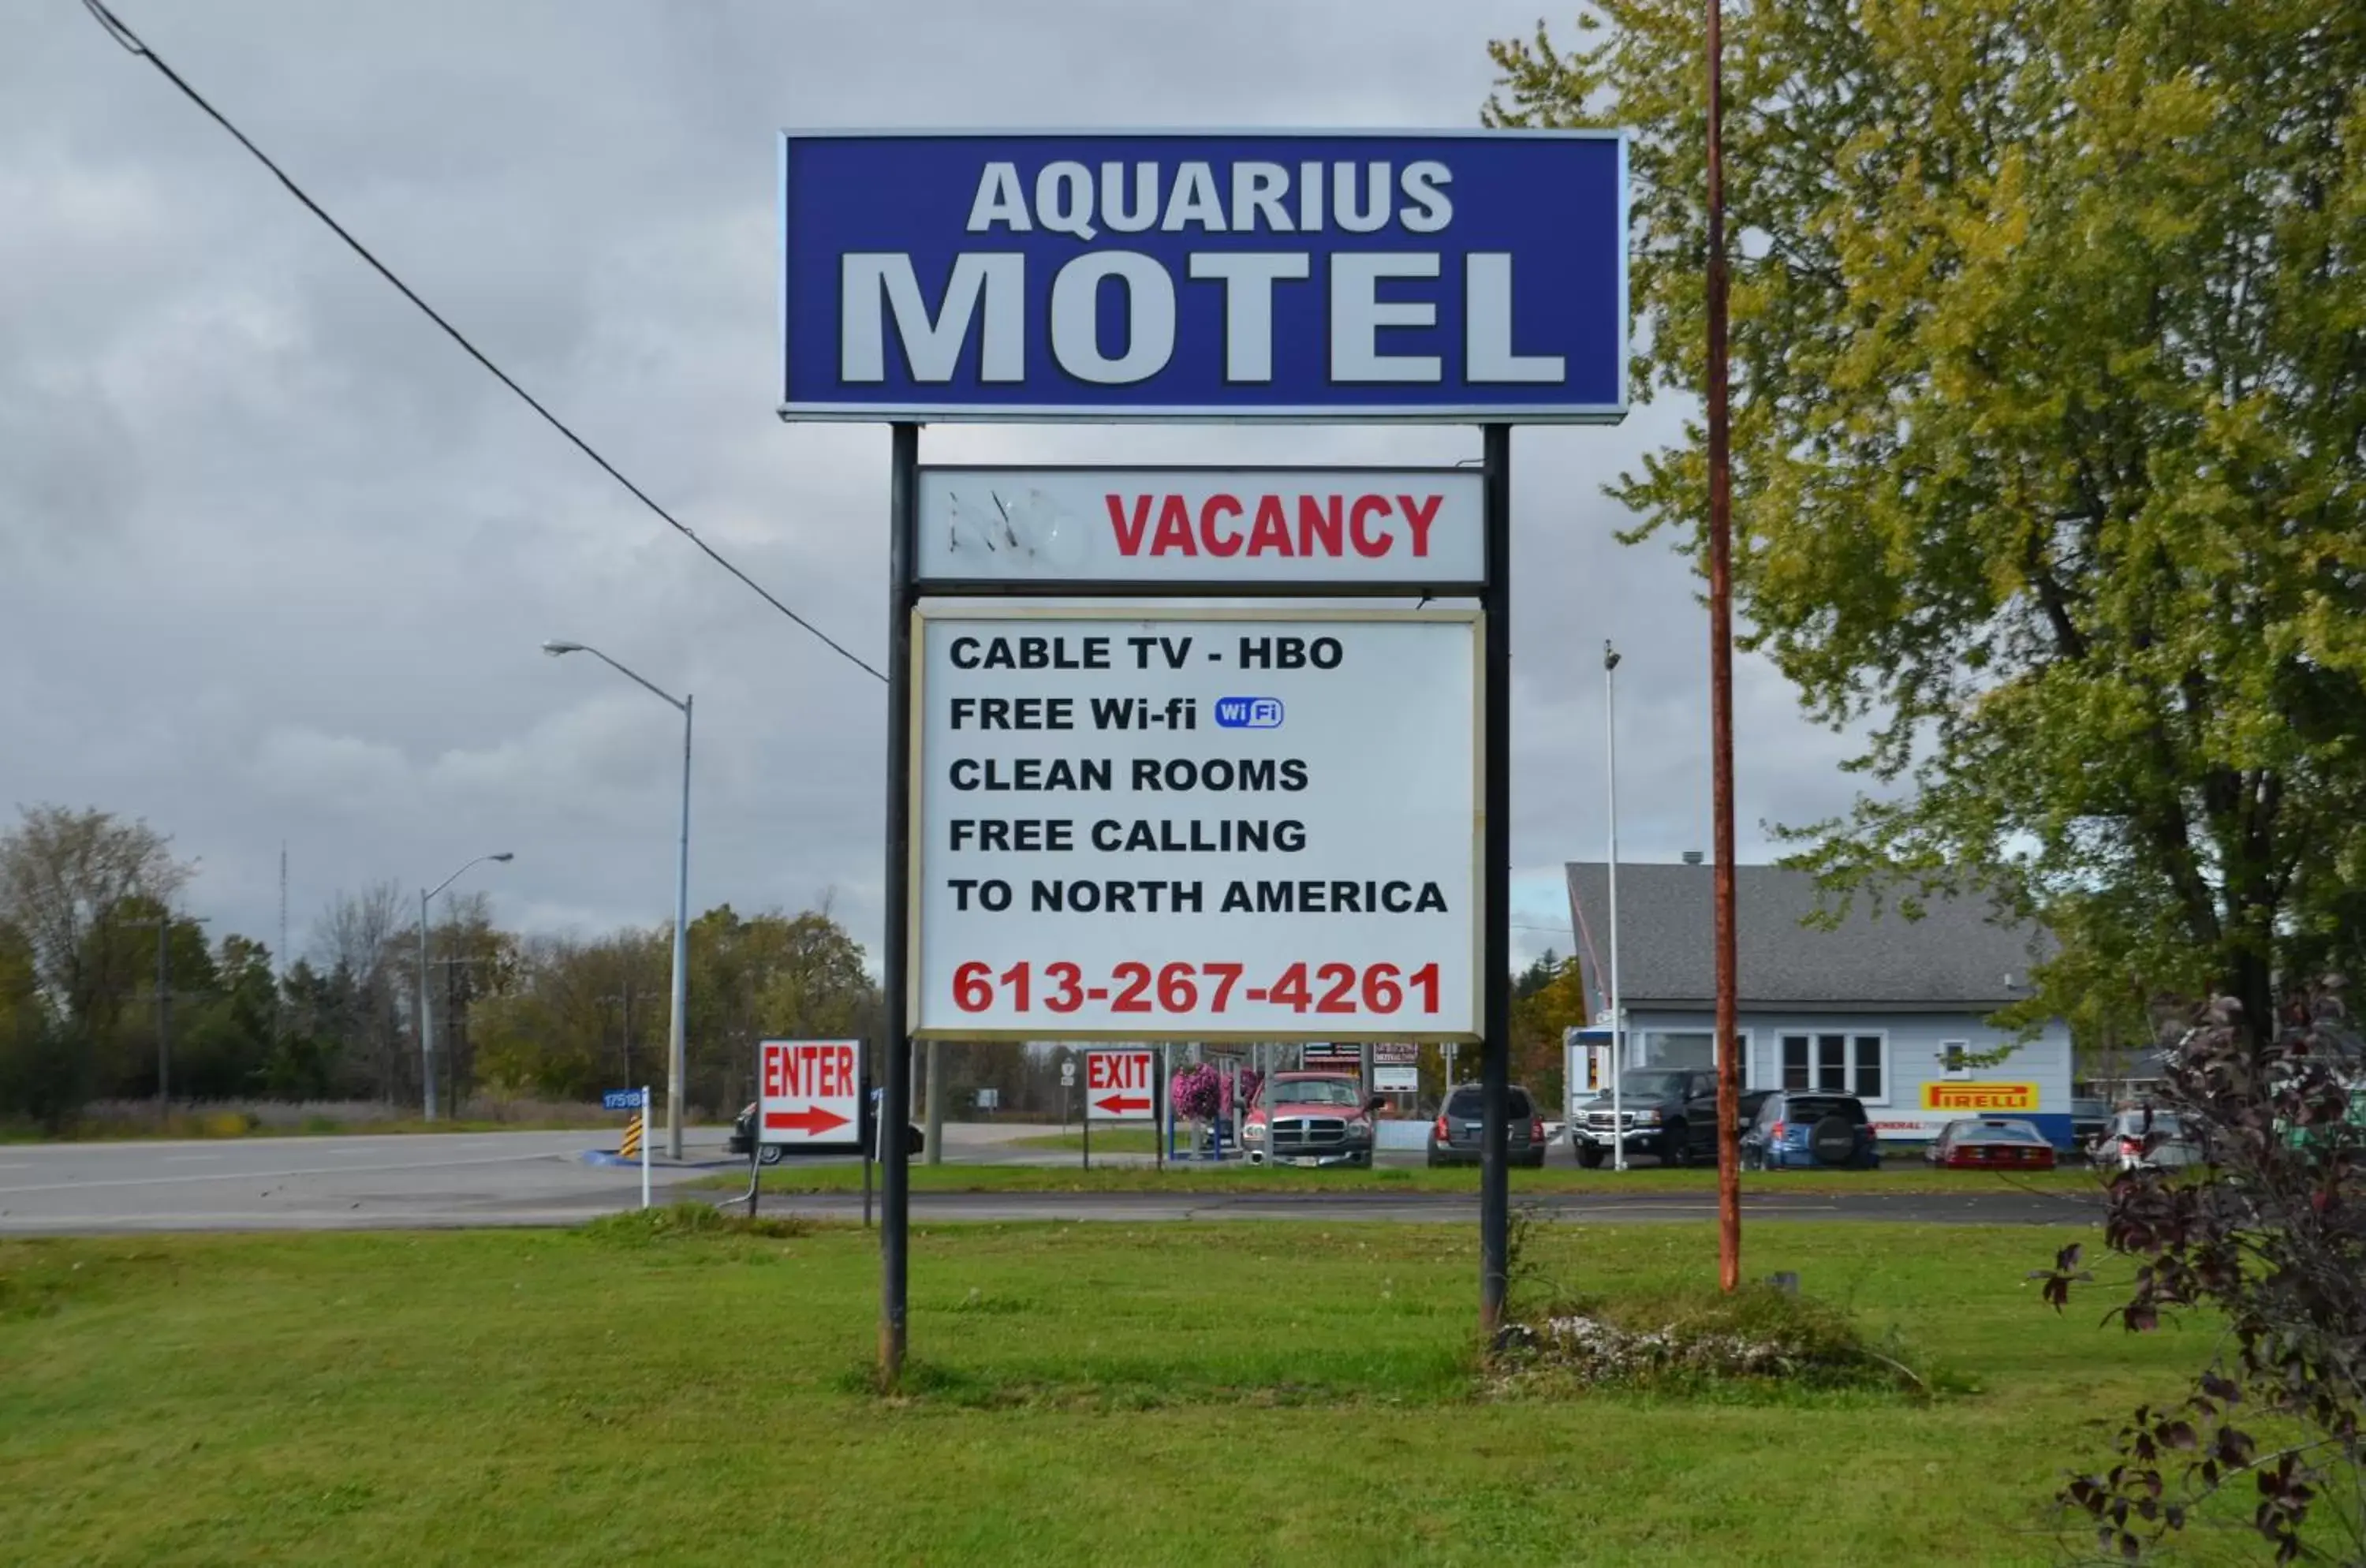 Property logo or sign in Aquarius Motel